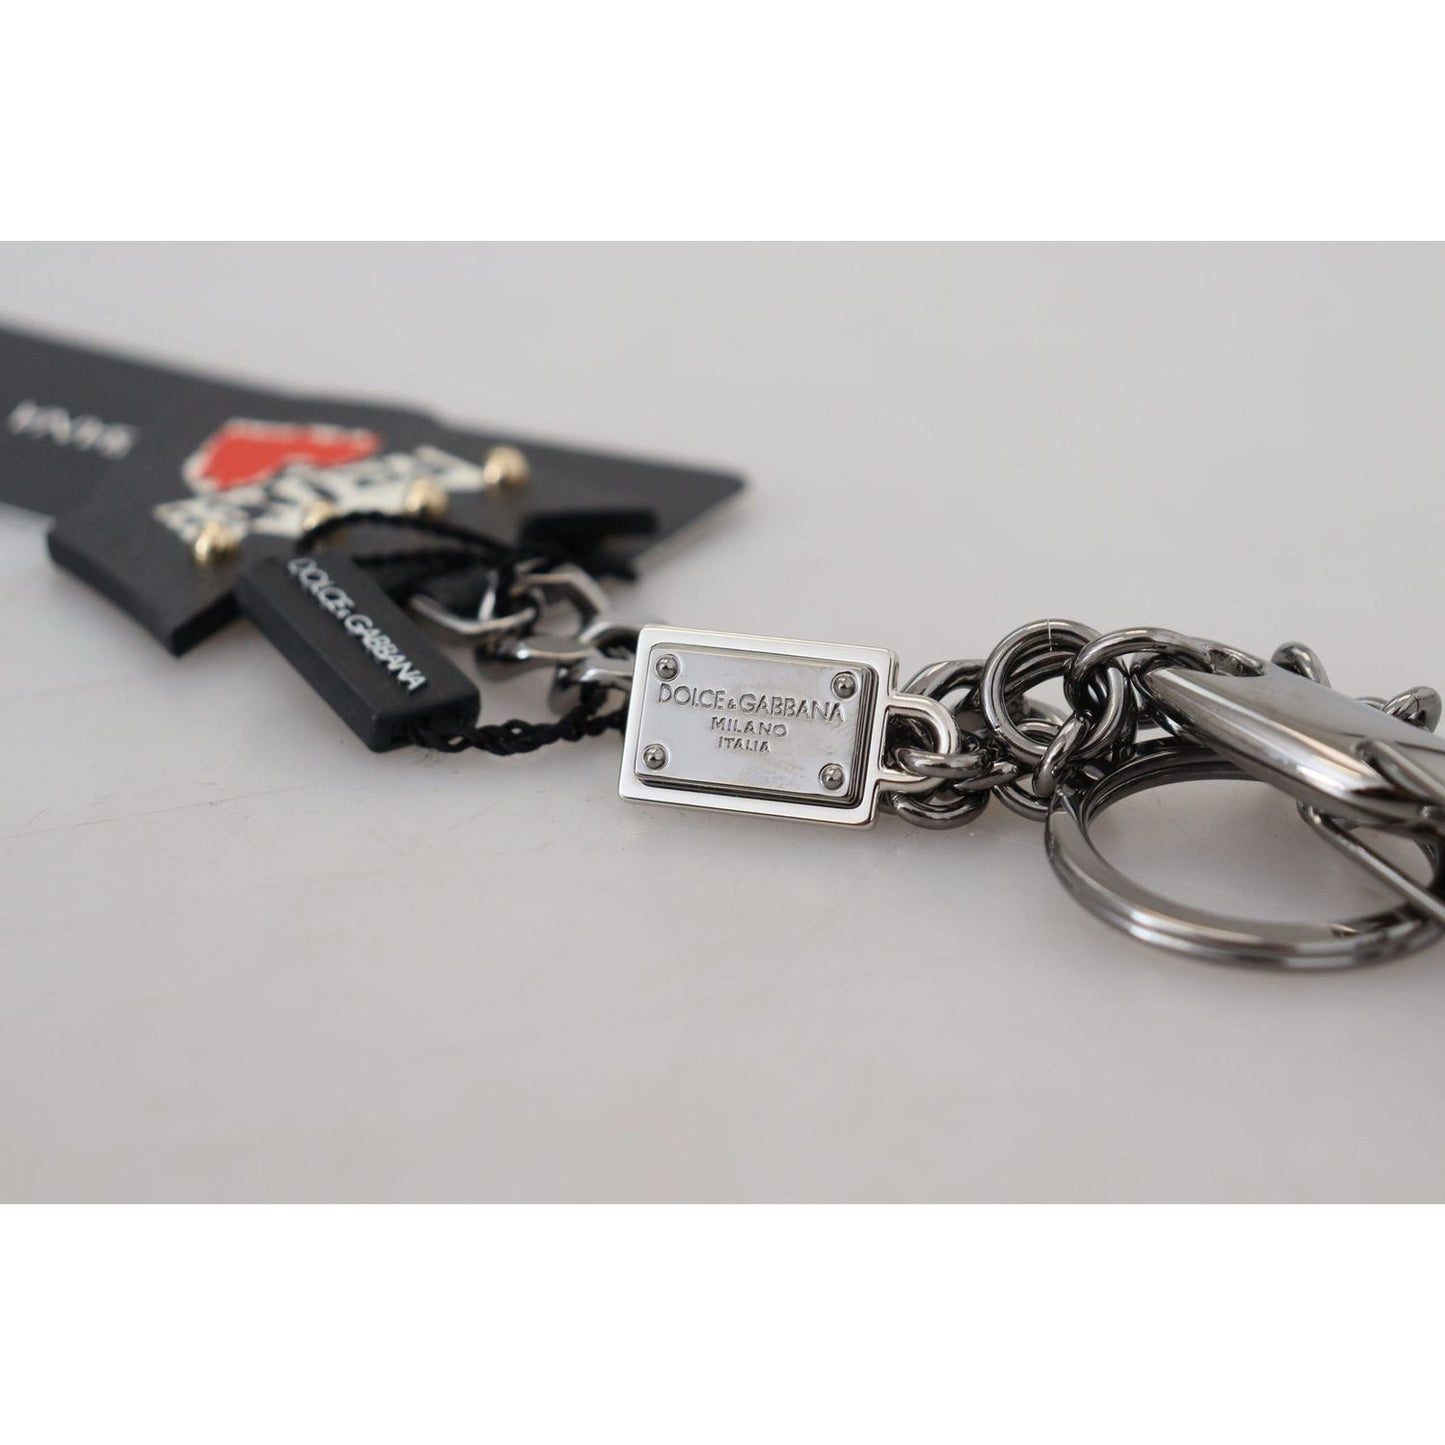 Elegant Silver and Black Designer Keychain